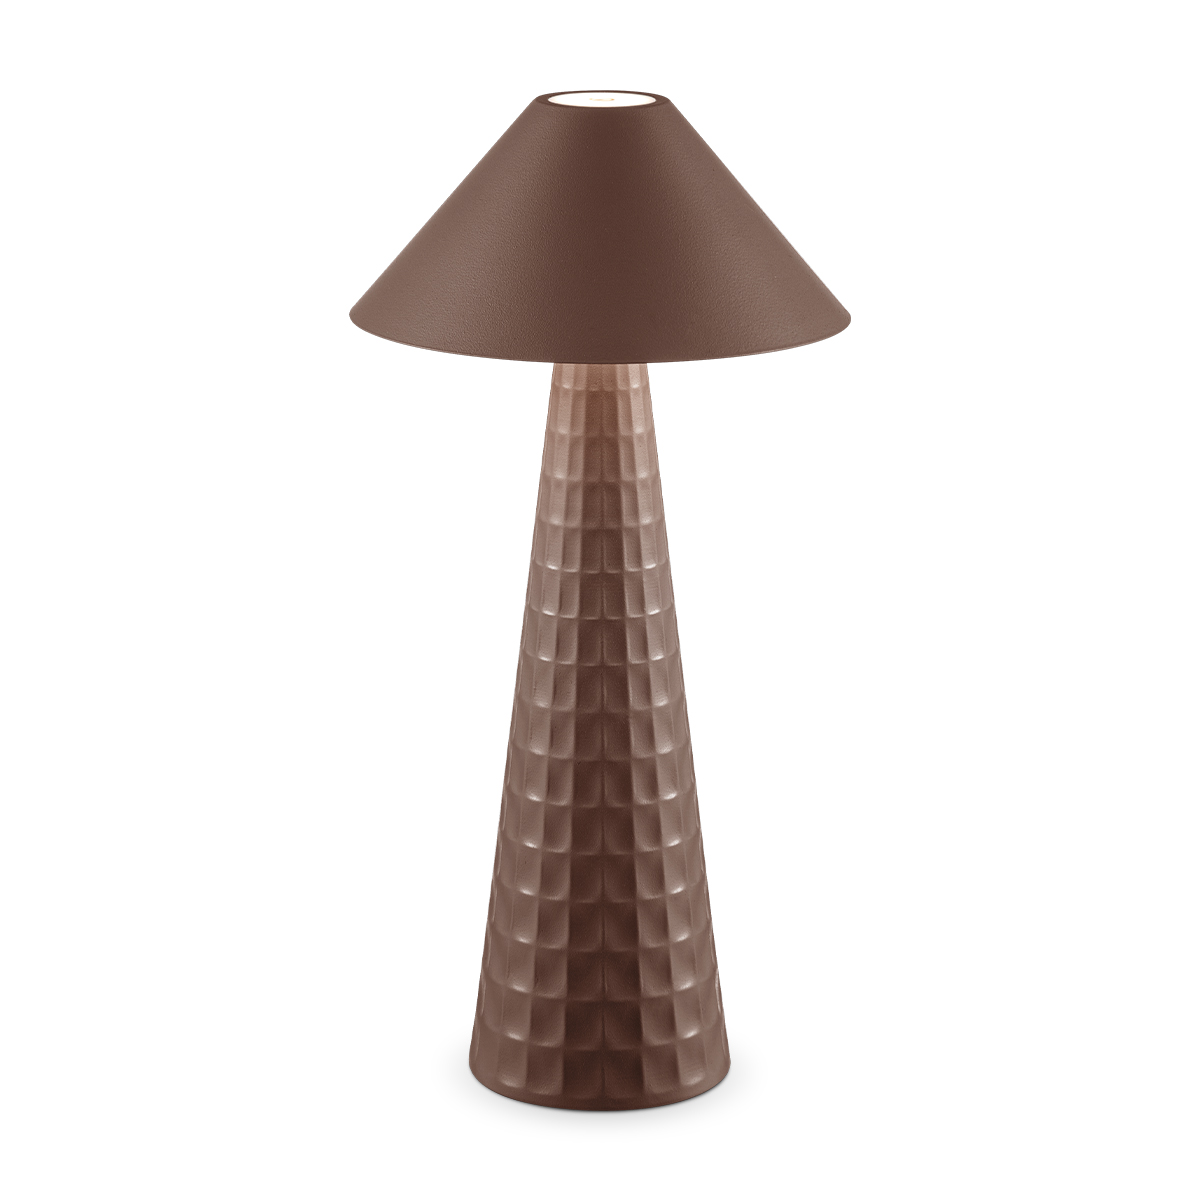 Tangla lighting - TLT7645-01BW - LED table lamp - rechargeable plastic and metal - brown - mushroom